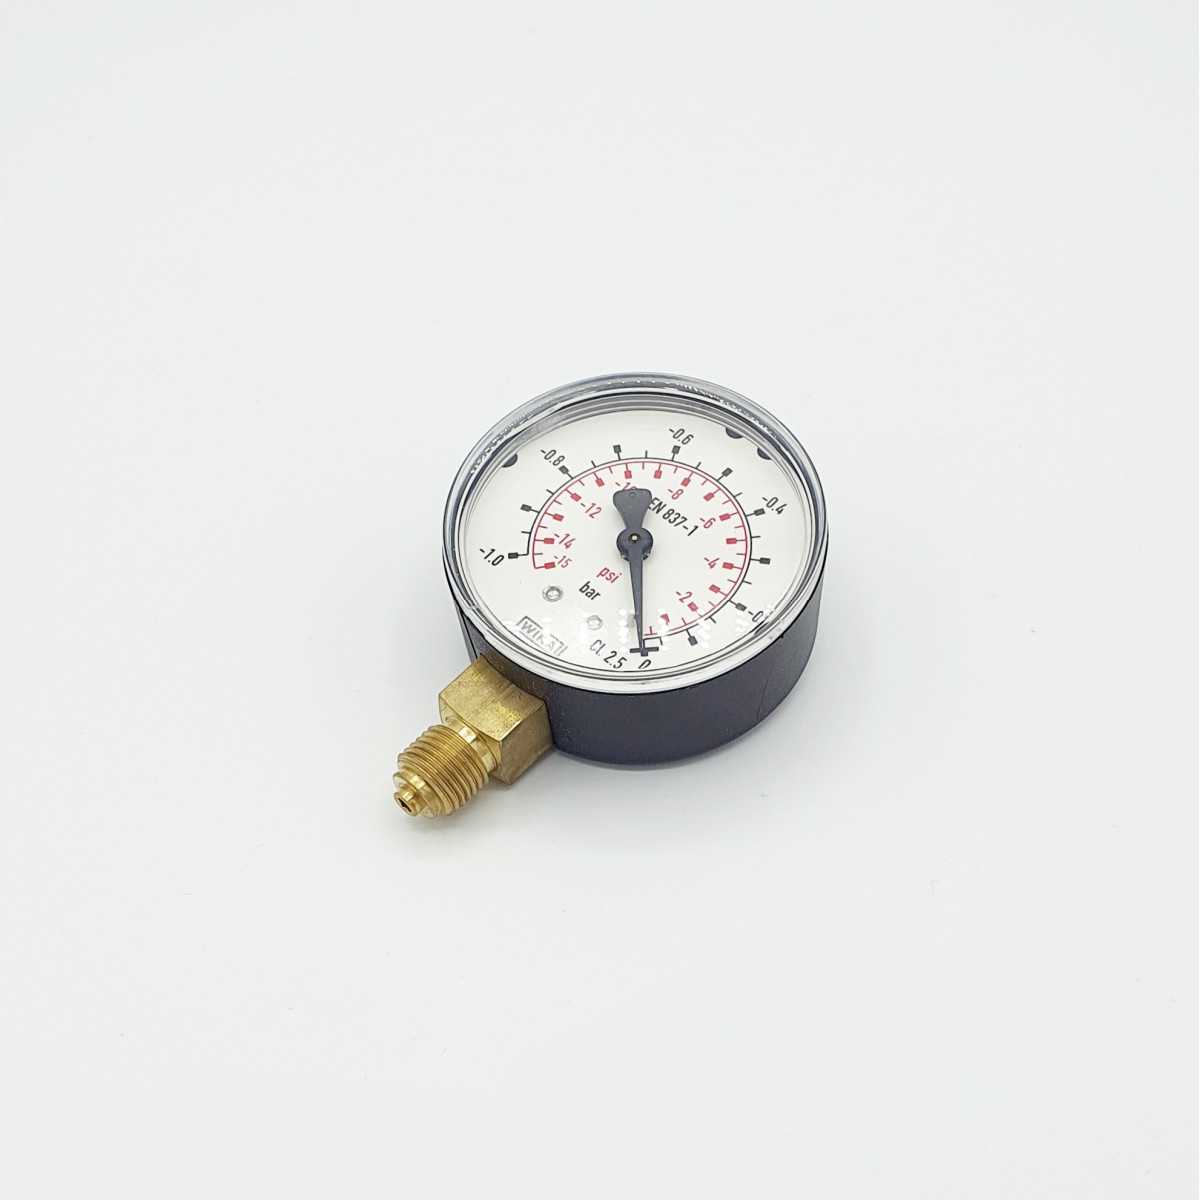 Vacuum gauge DM50 G 1/4" U | Beta Online Shop